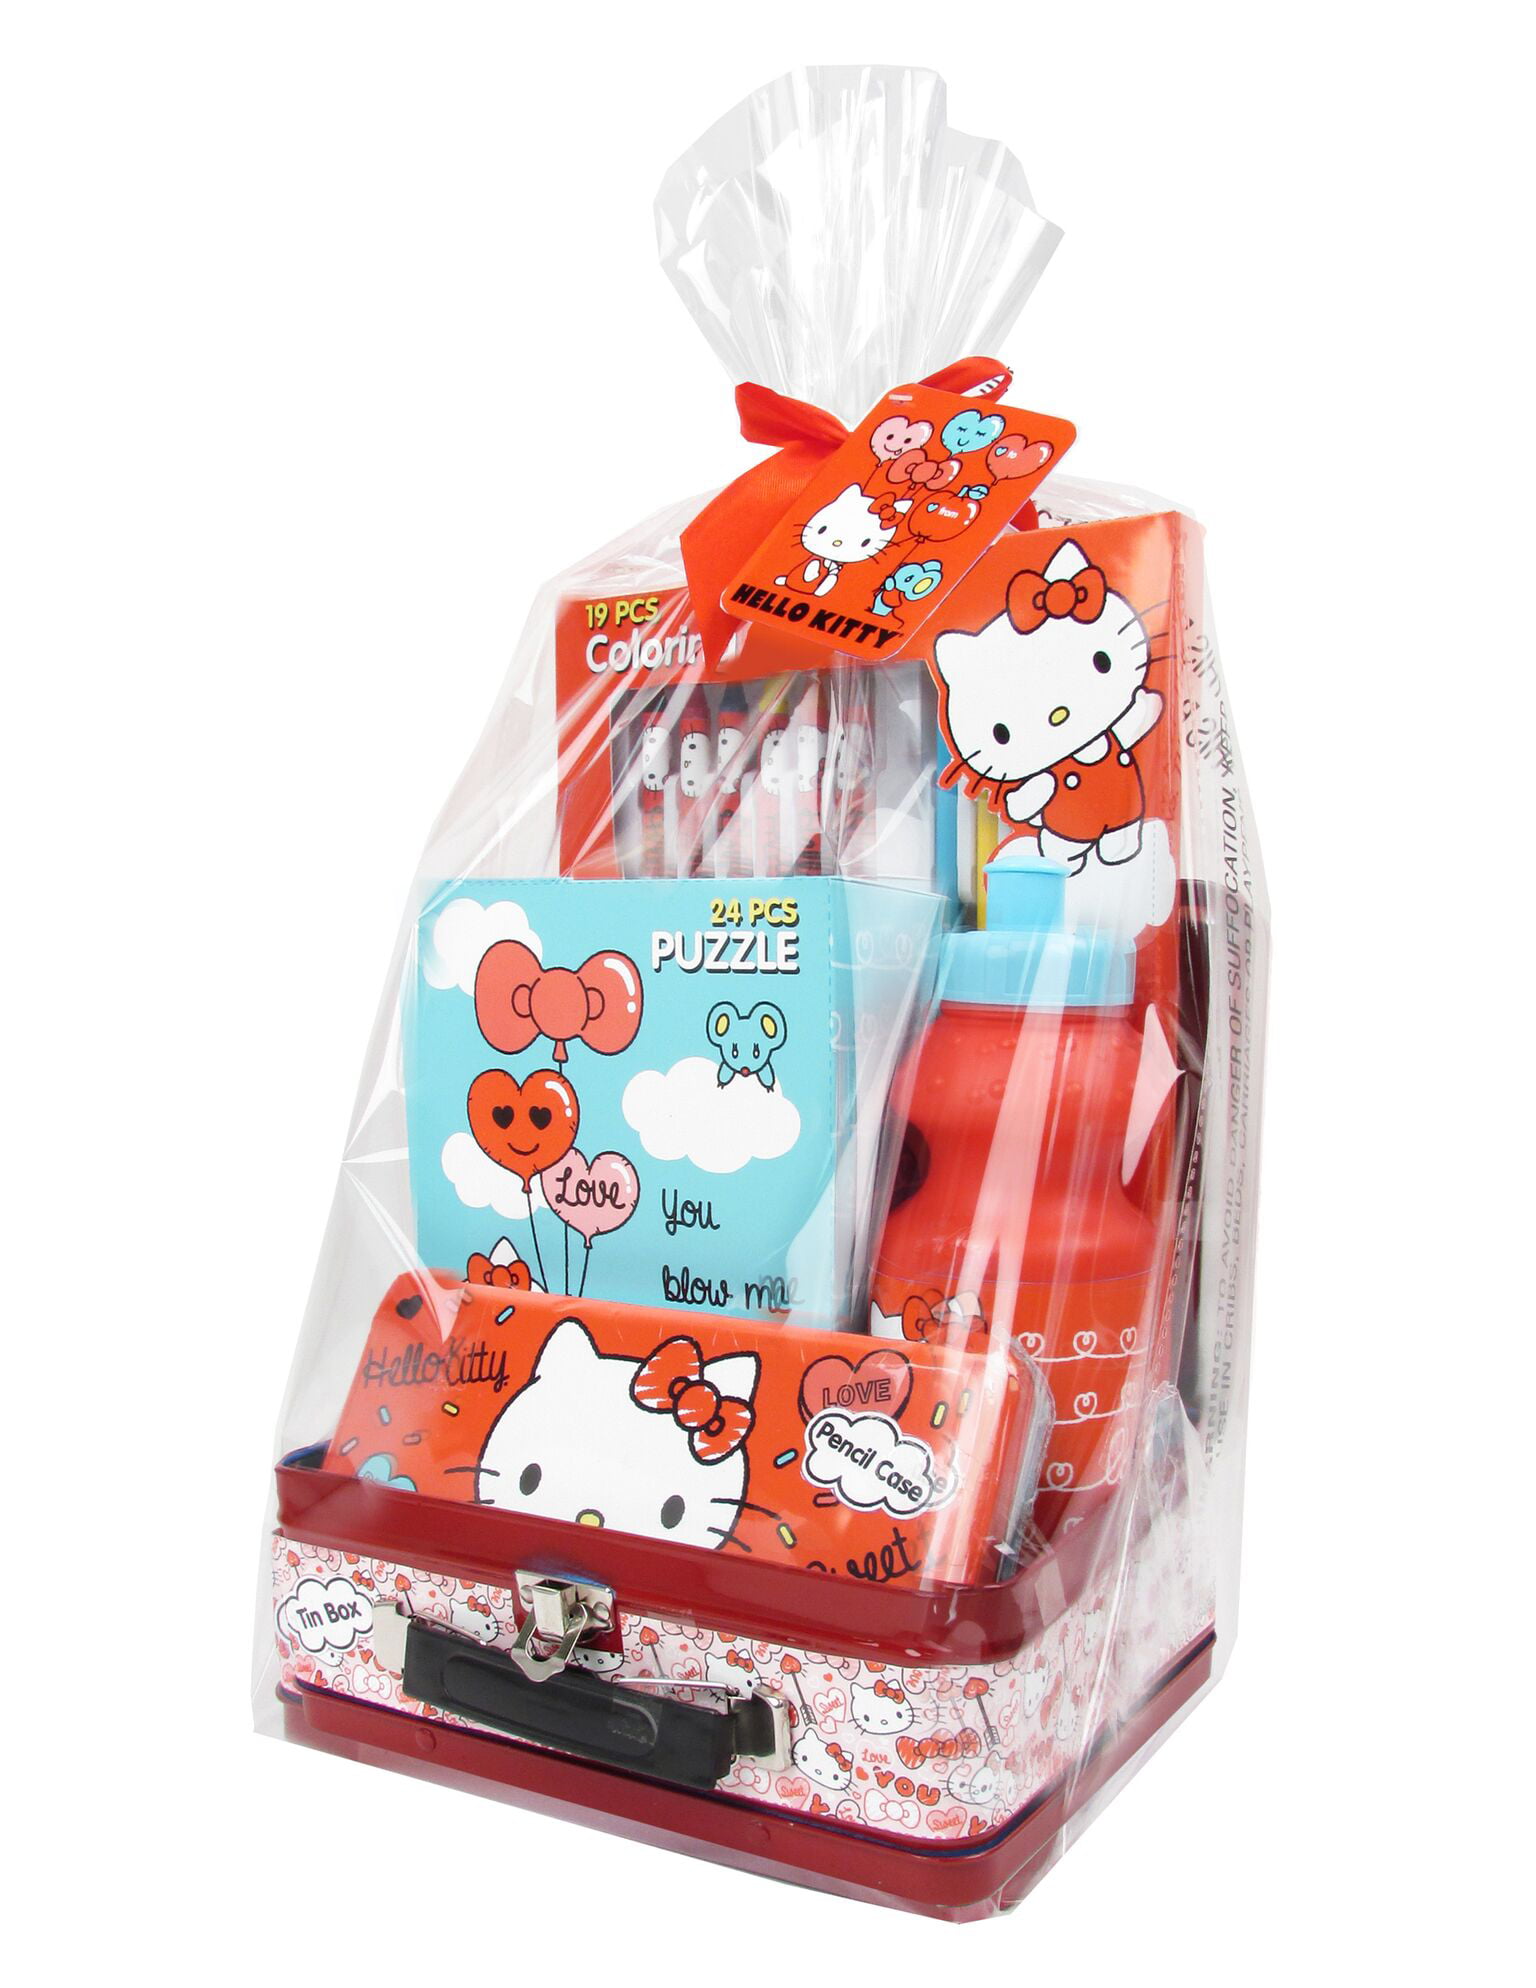 Megatoys Hello Kitty Tin Lunch Box Valentine's Day Gift Set - Walmart.com